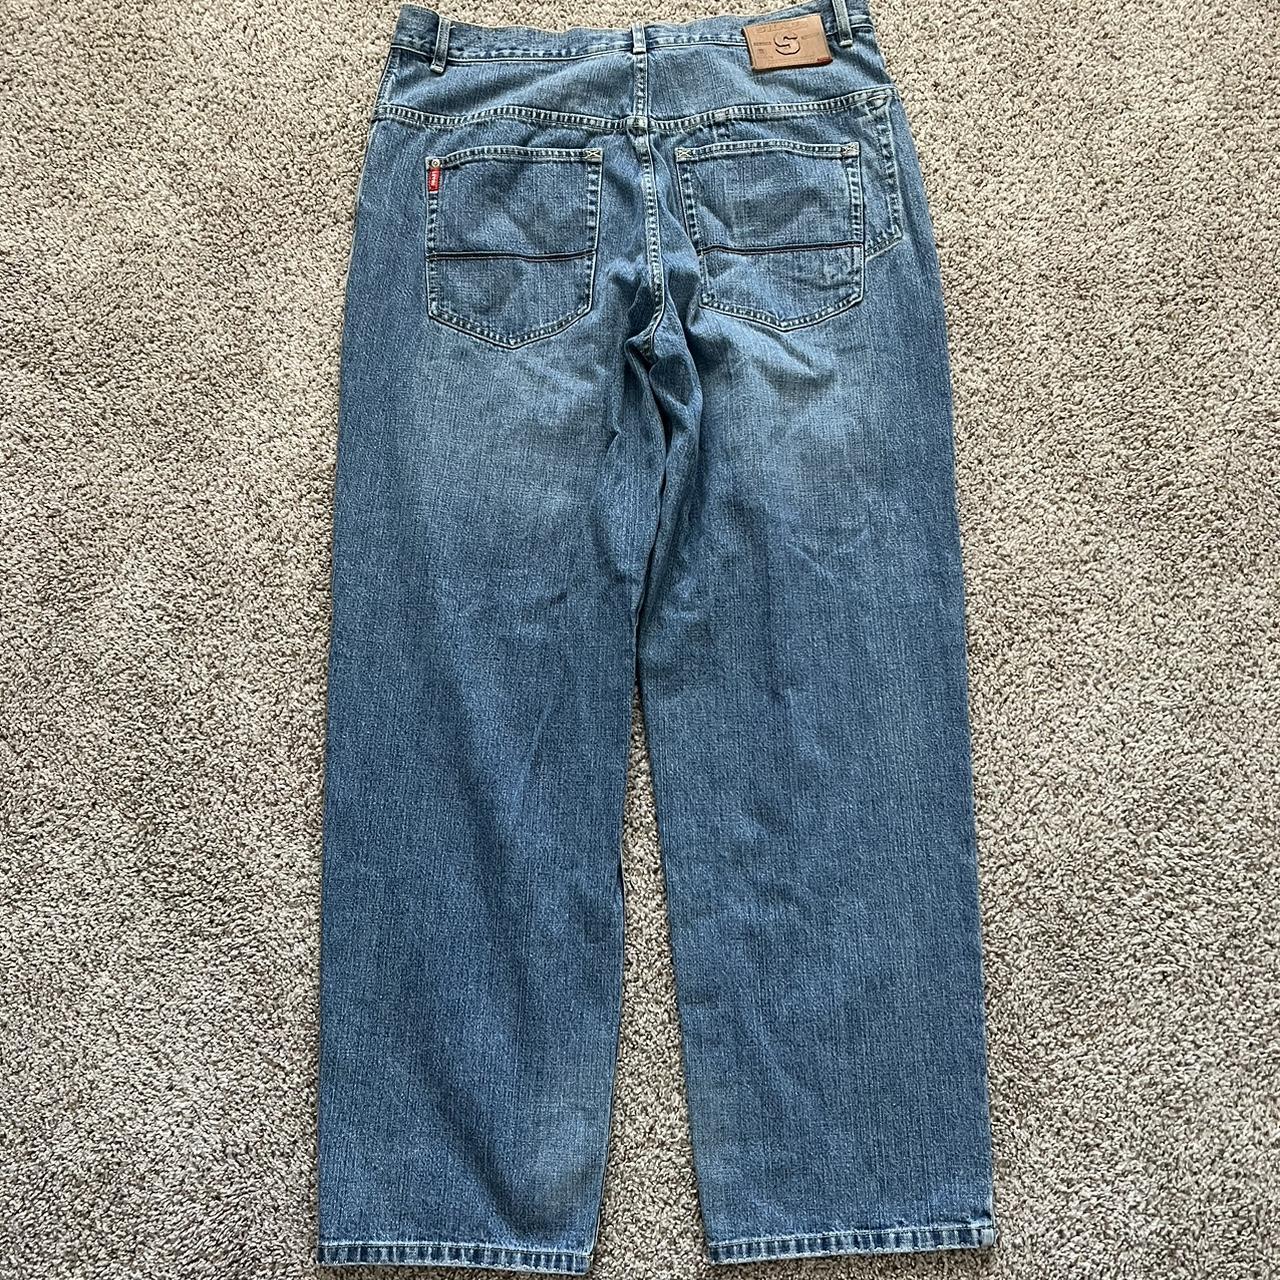 Shady ltd jeans 38x33 Hidden pocket - Depop